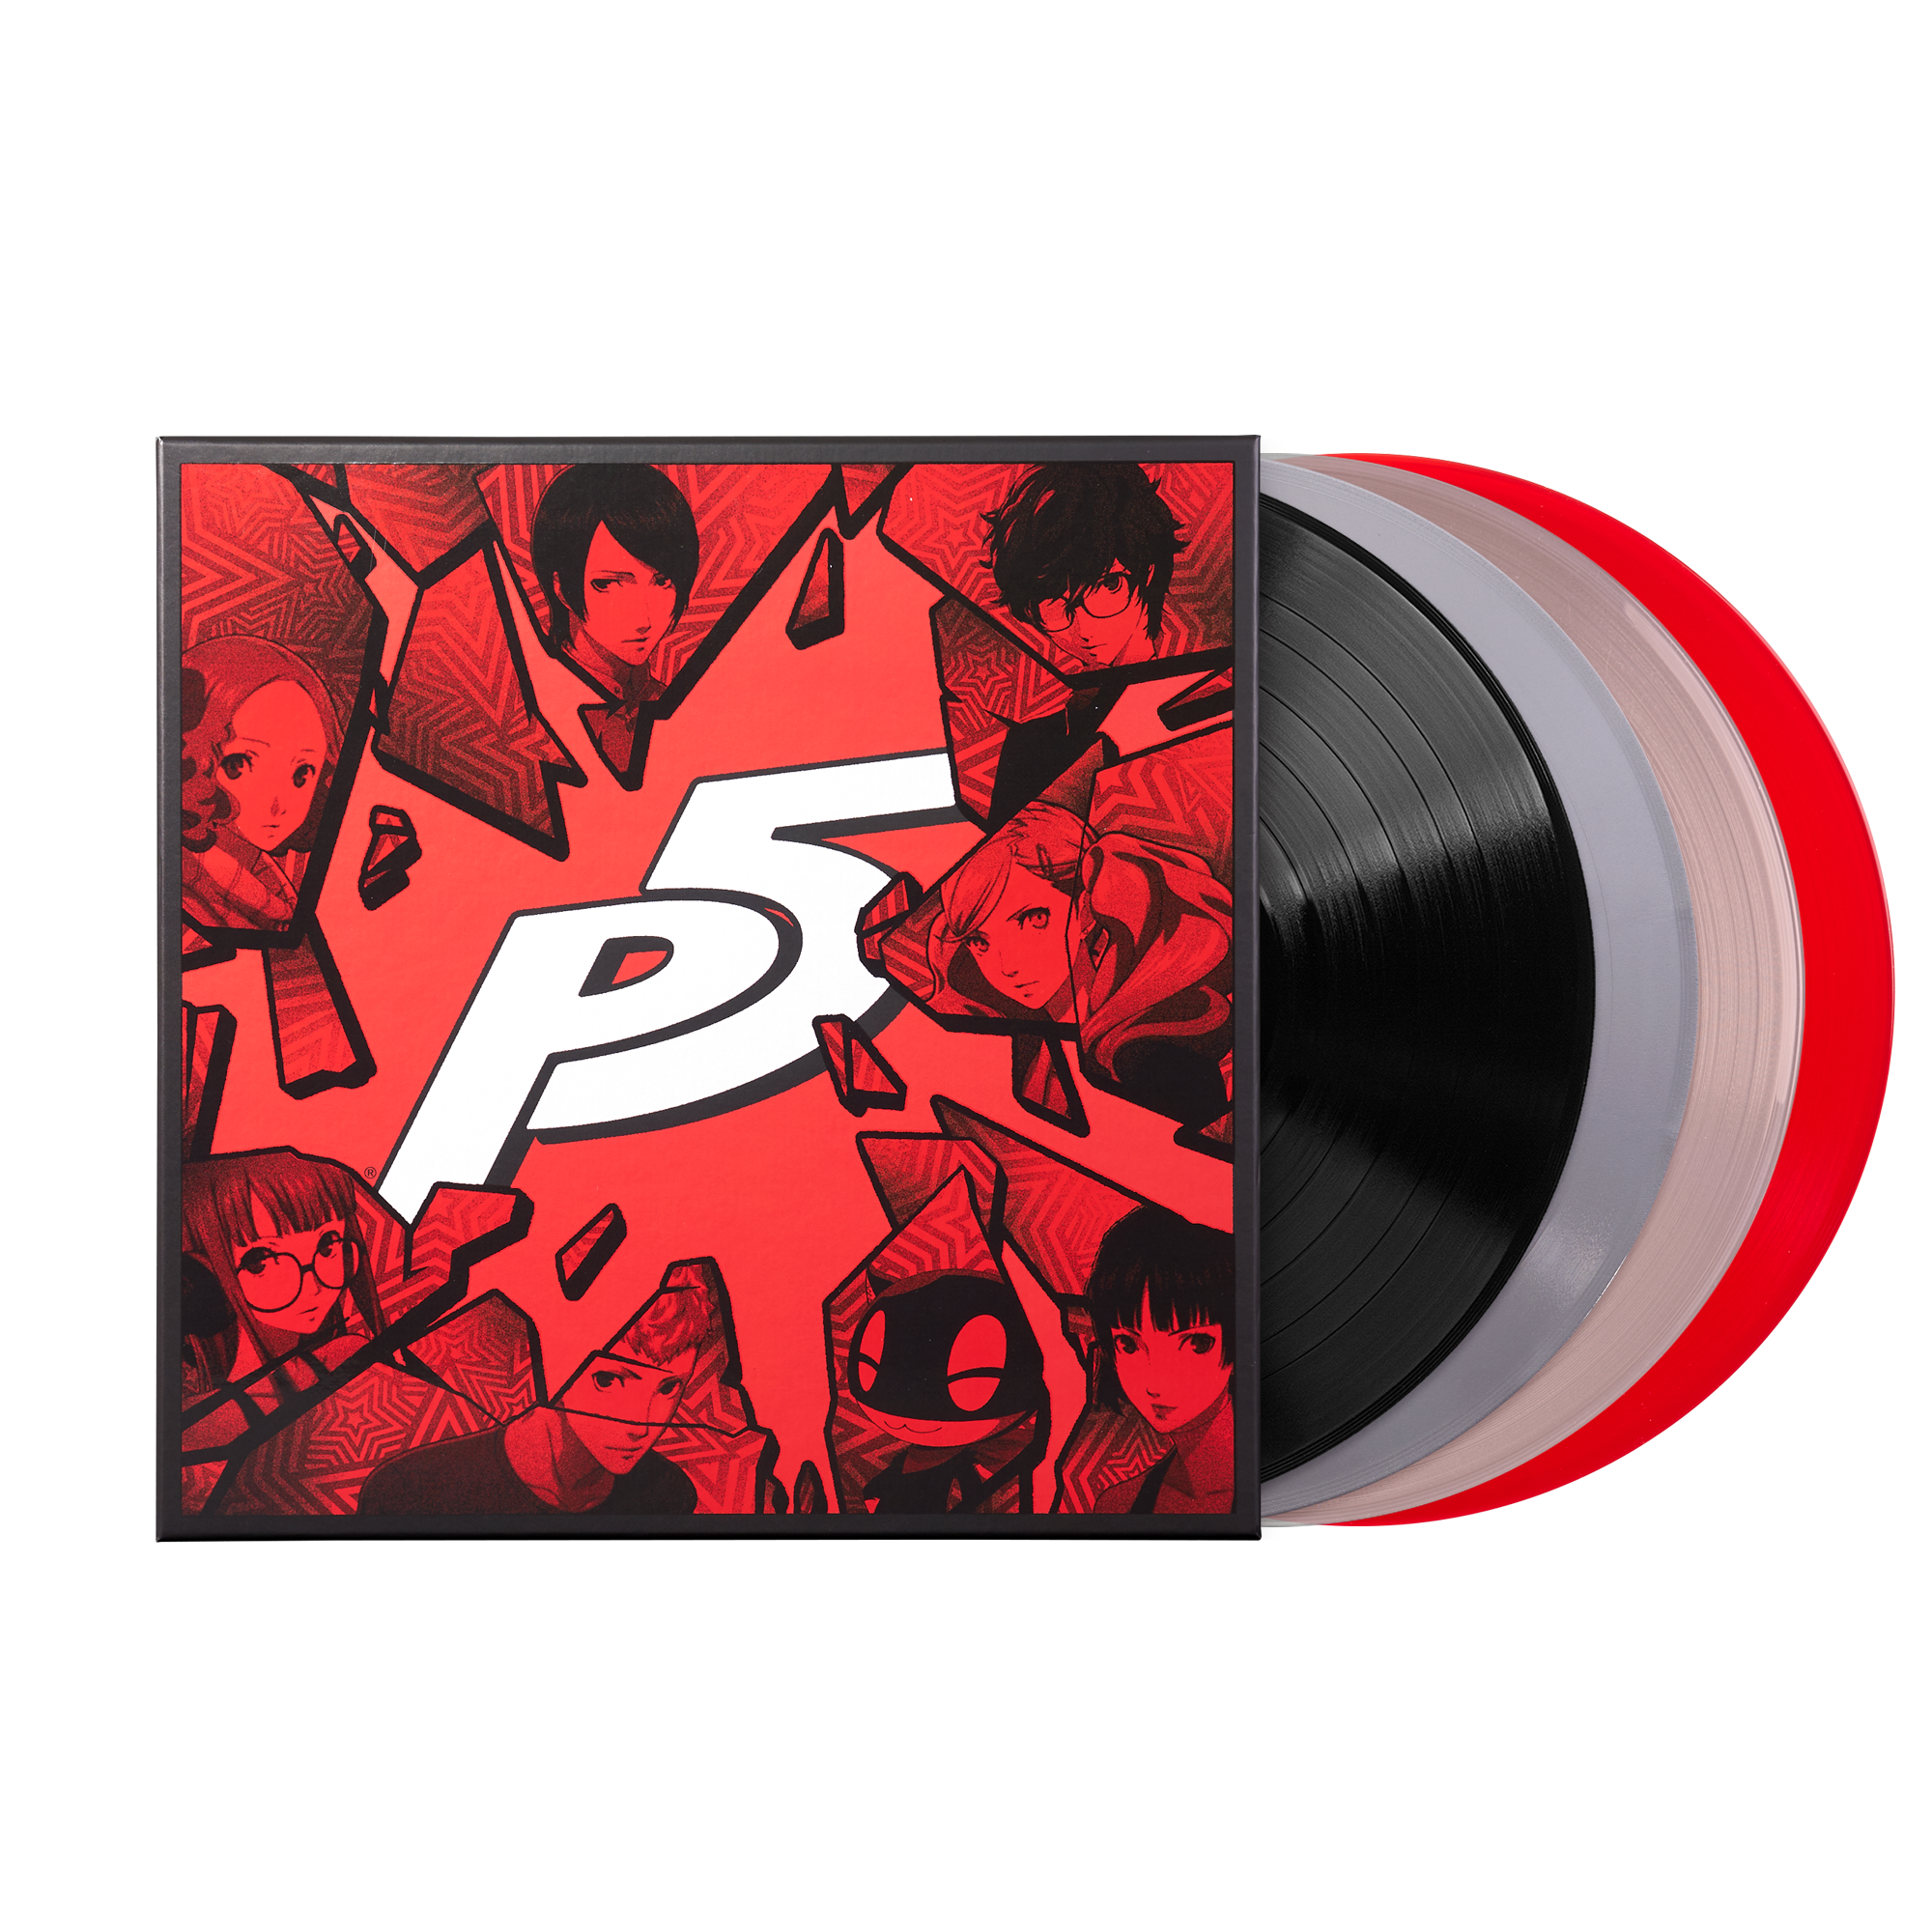 Persona 5 Soundtrack (Essential Edition) - Atlus Sound Team (4xLP Viny